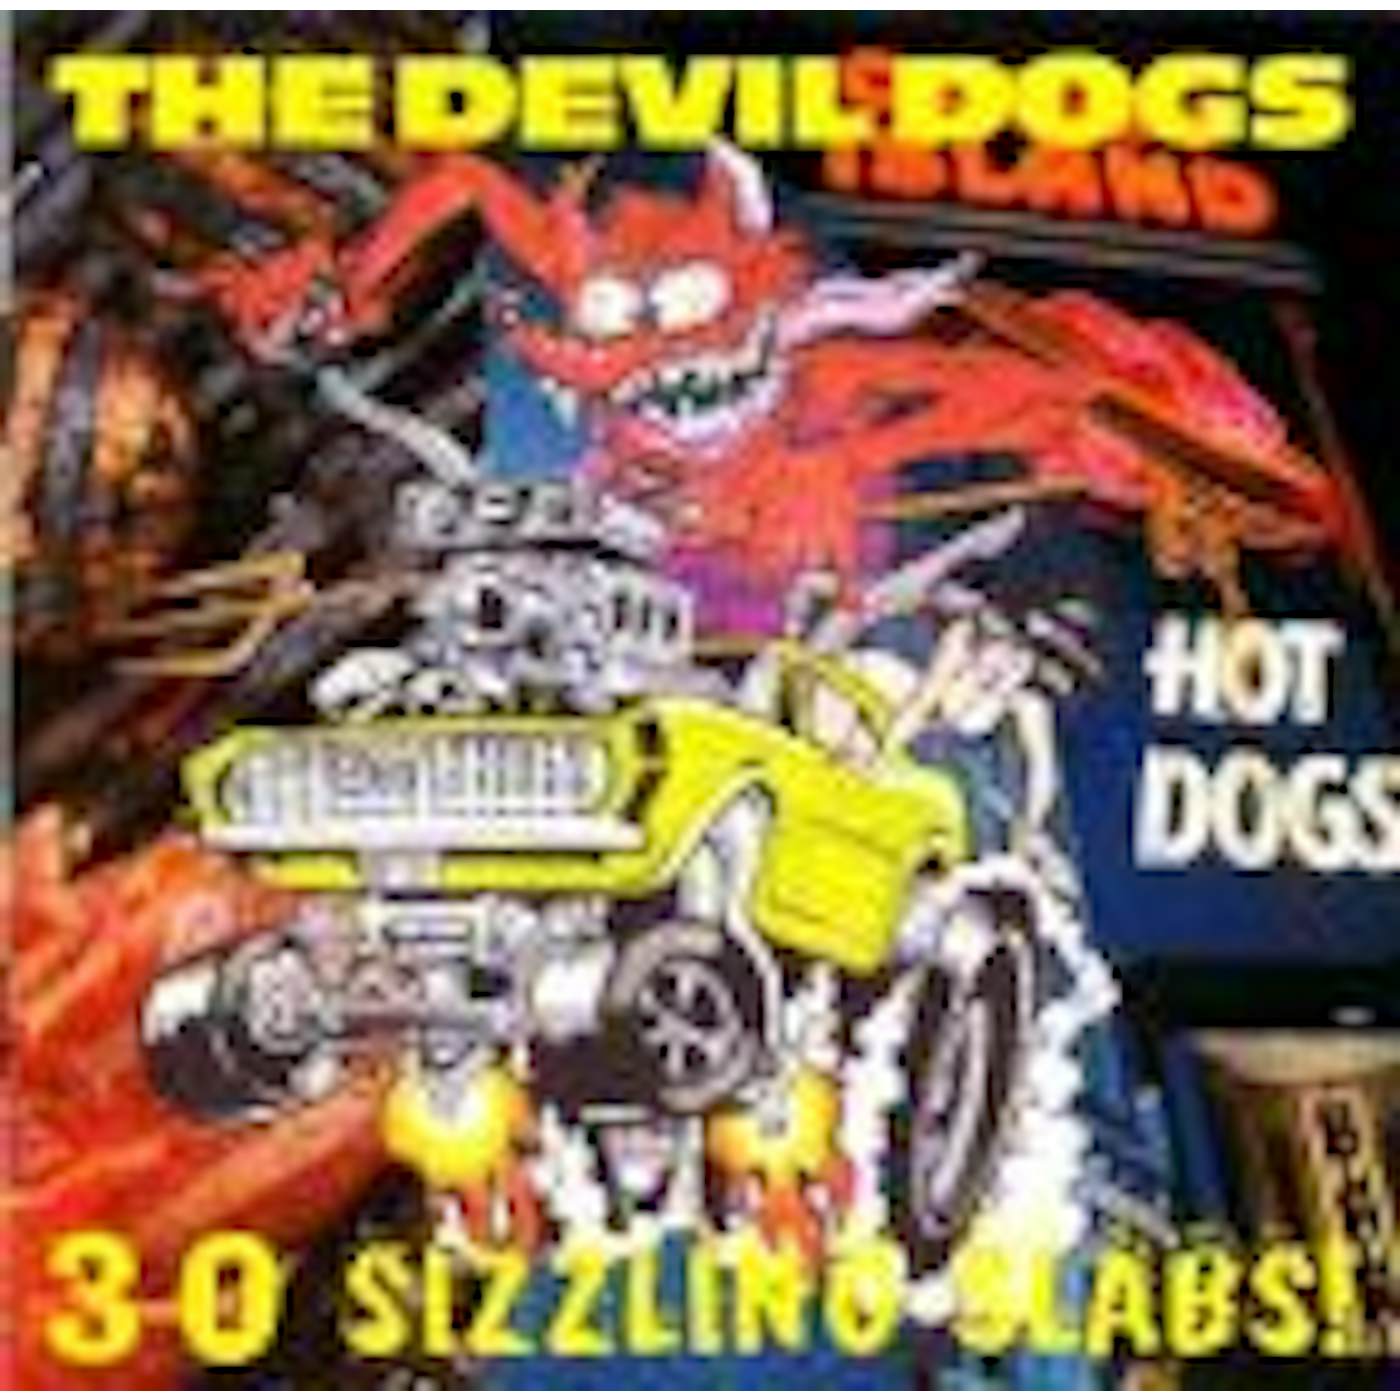 The Devil Dogs 30 SIZZLING SLABS CD